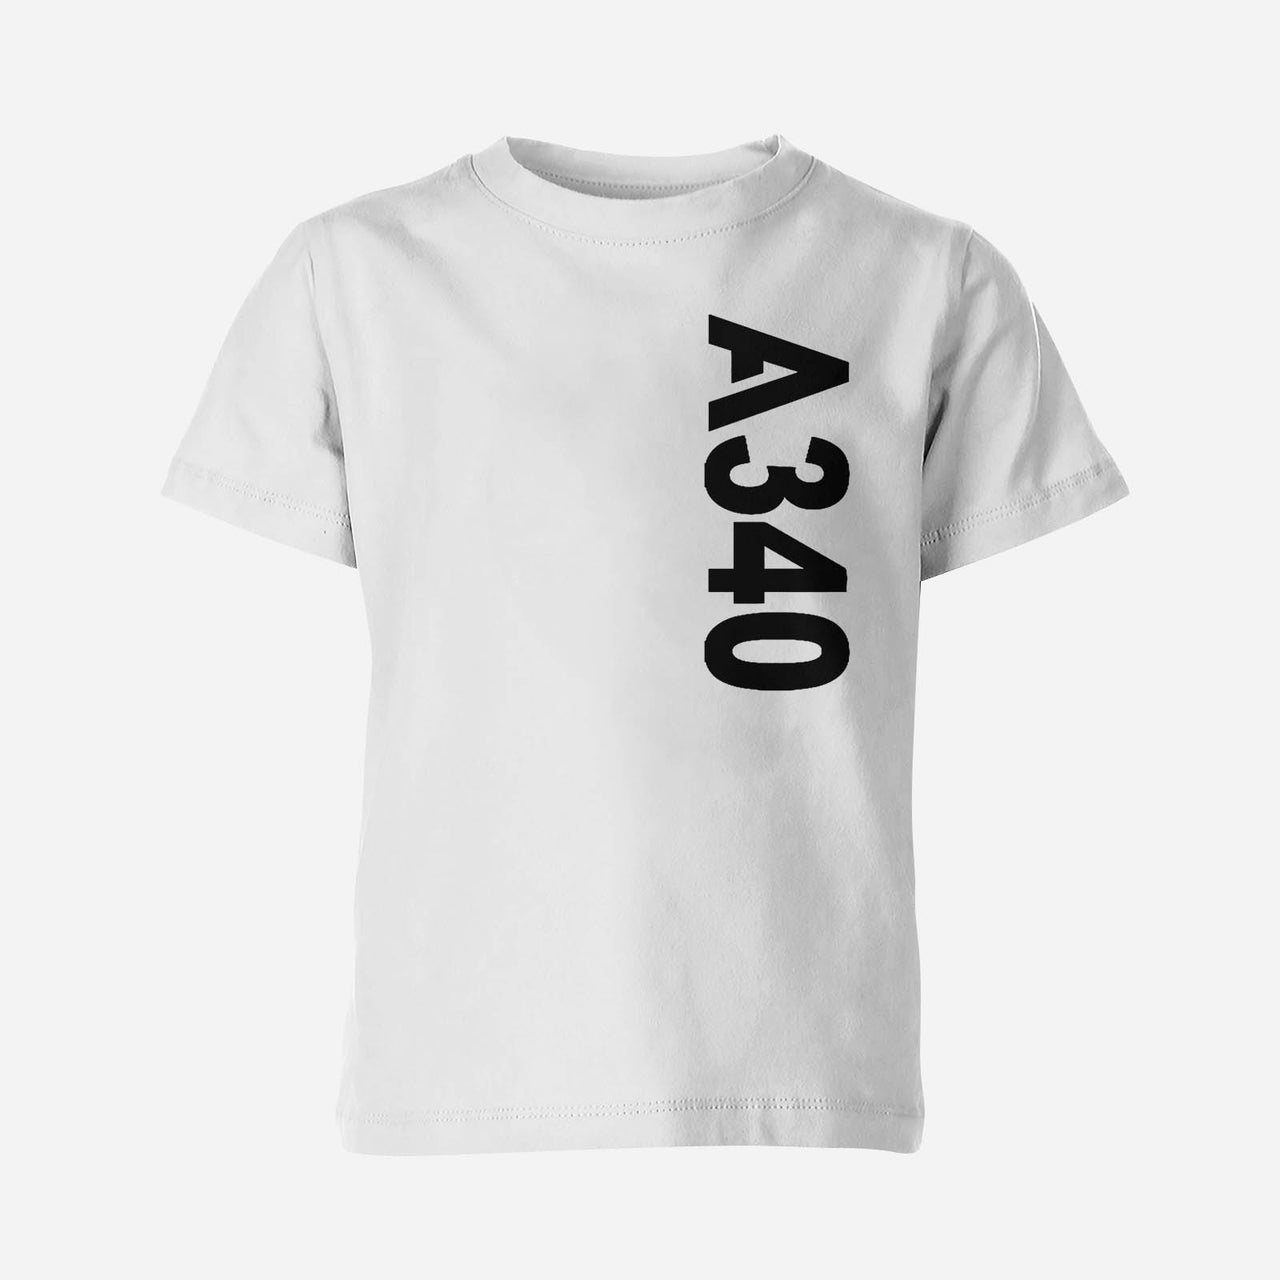 A340 Side Text Designed Children T-Shirts